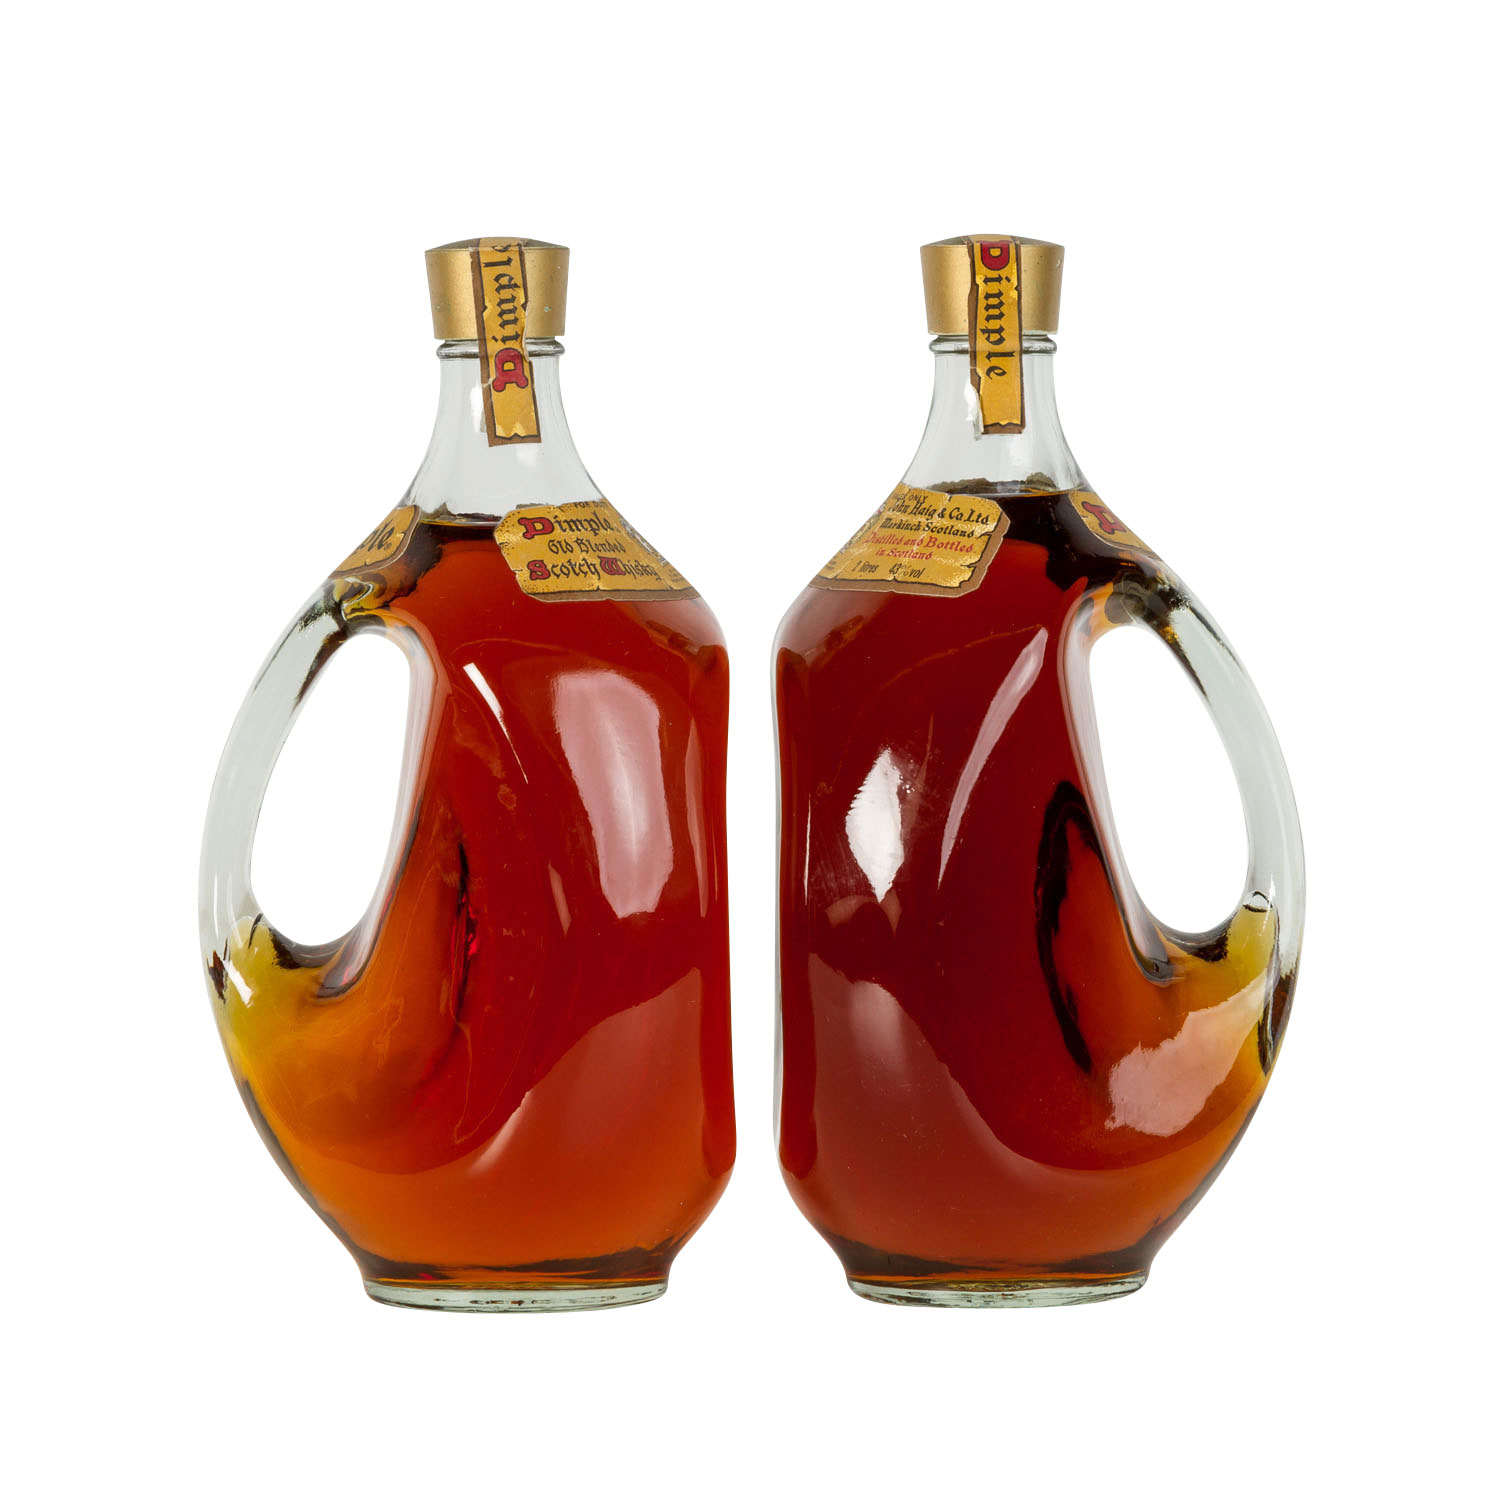 2 Flaschen Blended Scotch Whisky DIMPLE,Region: Lowlands, 43% Vol., 2000ml, Füllstand im - Image 3 of 3